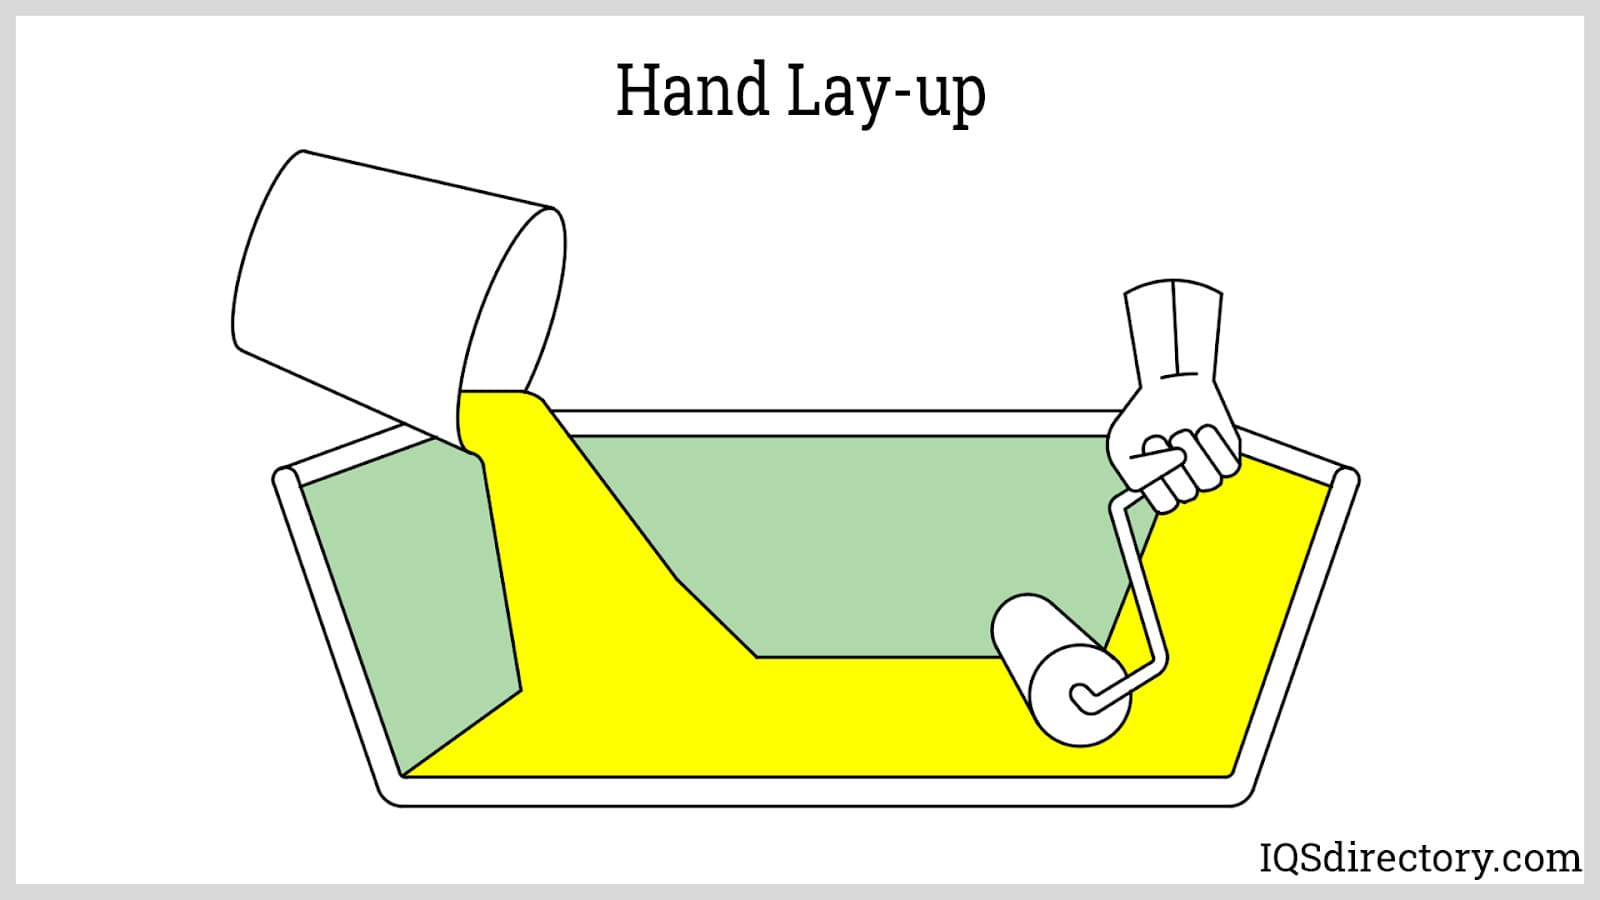 Hand Lay-up